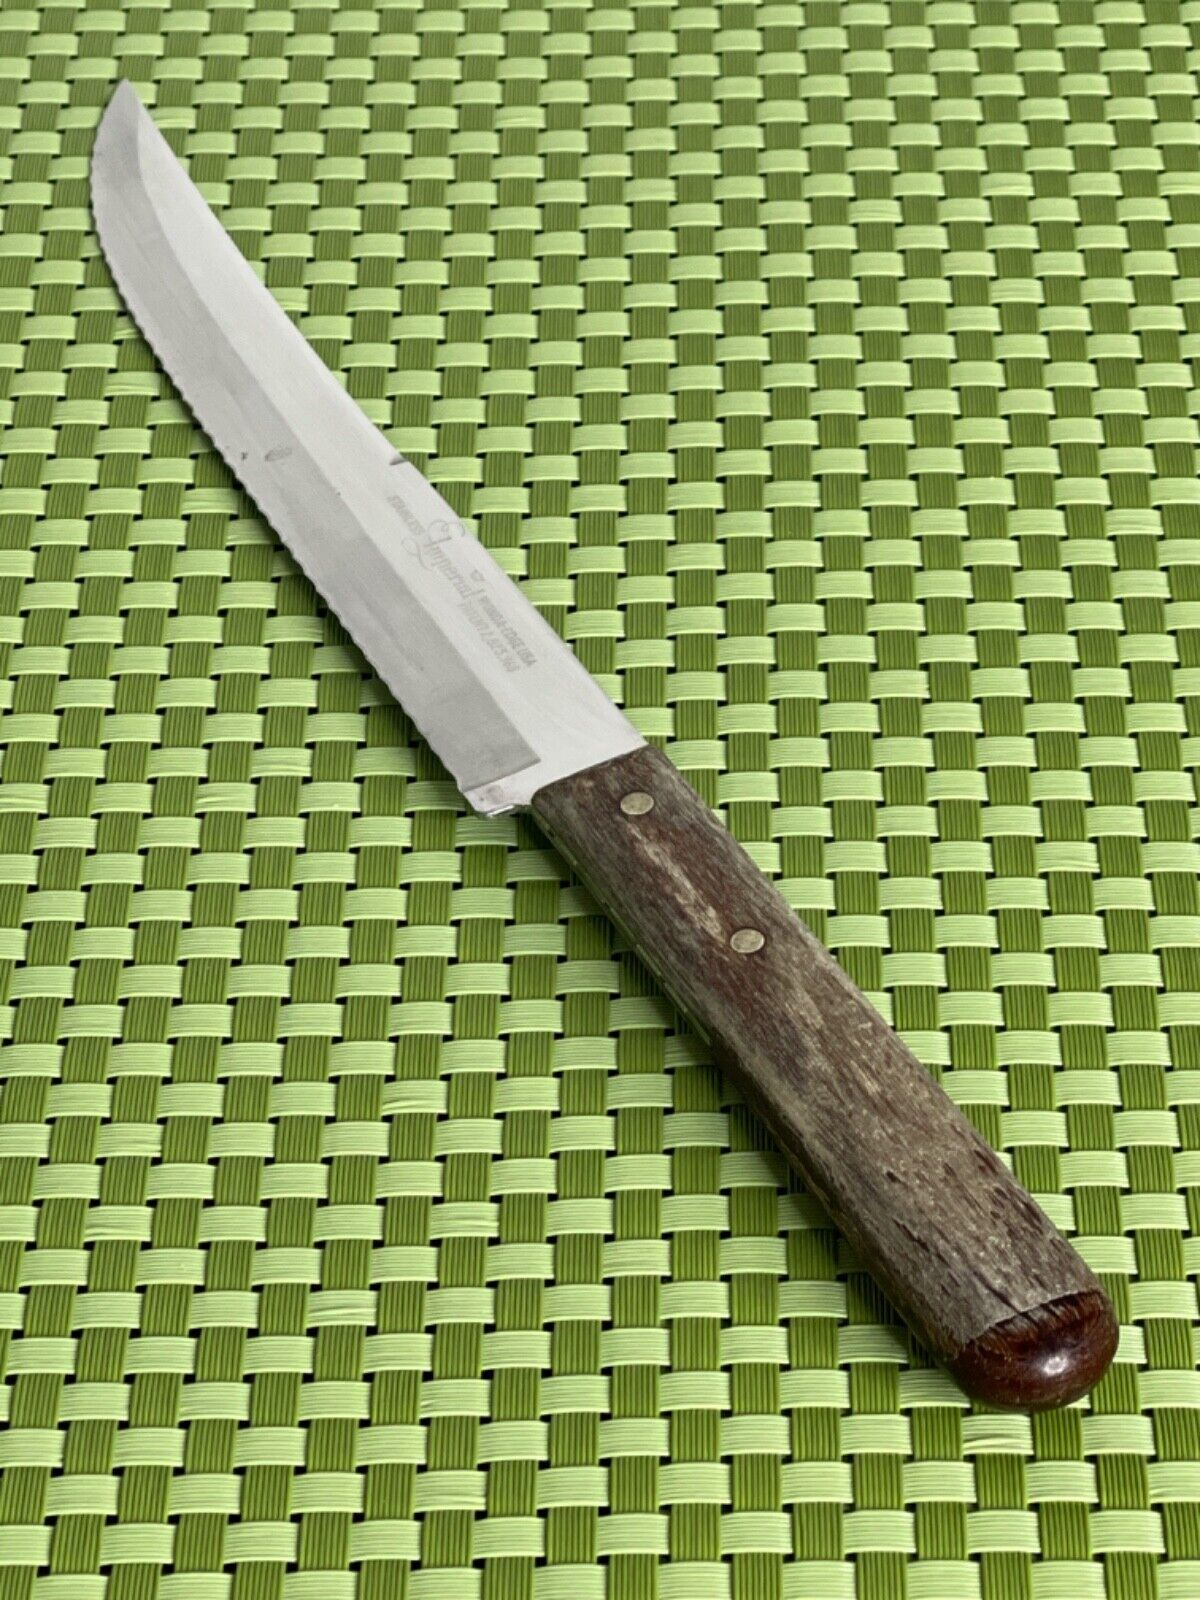 Imperial Stainless Serrated Knife Wonda Edge Wood Handle USA Flatware B56G